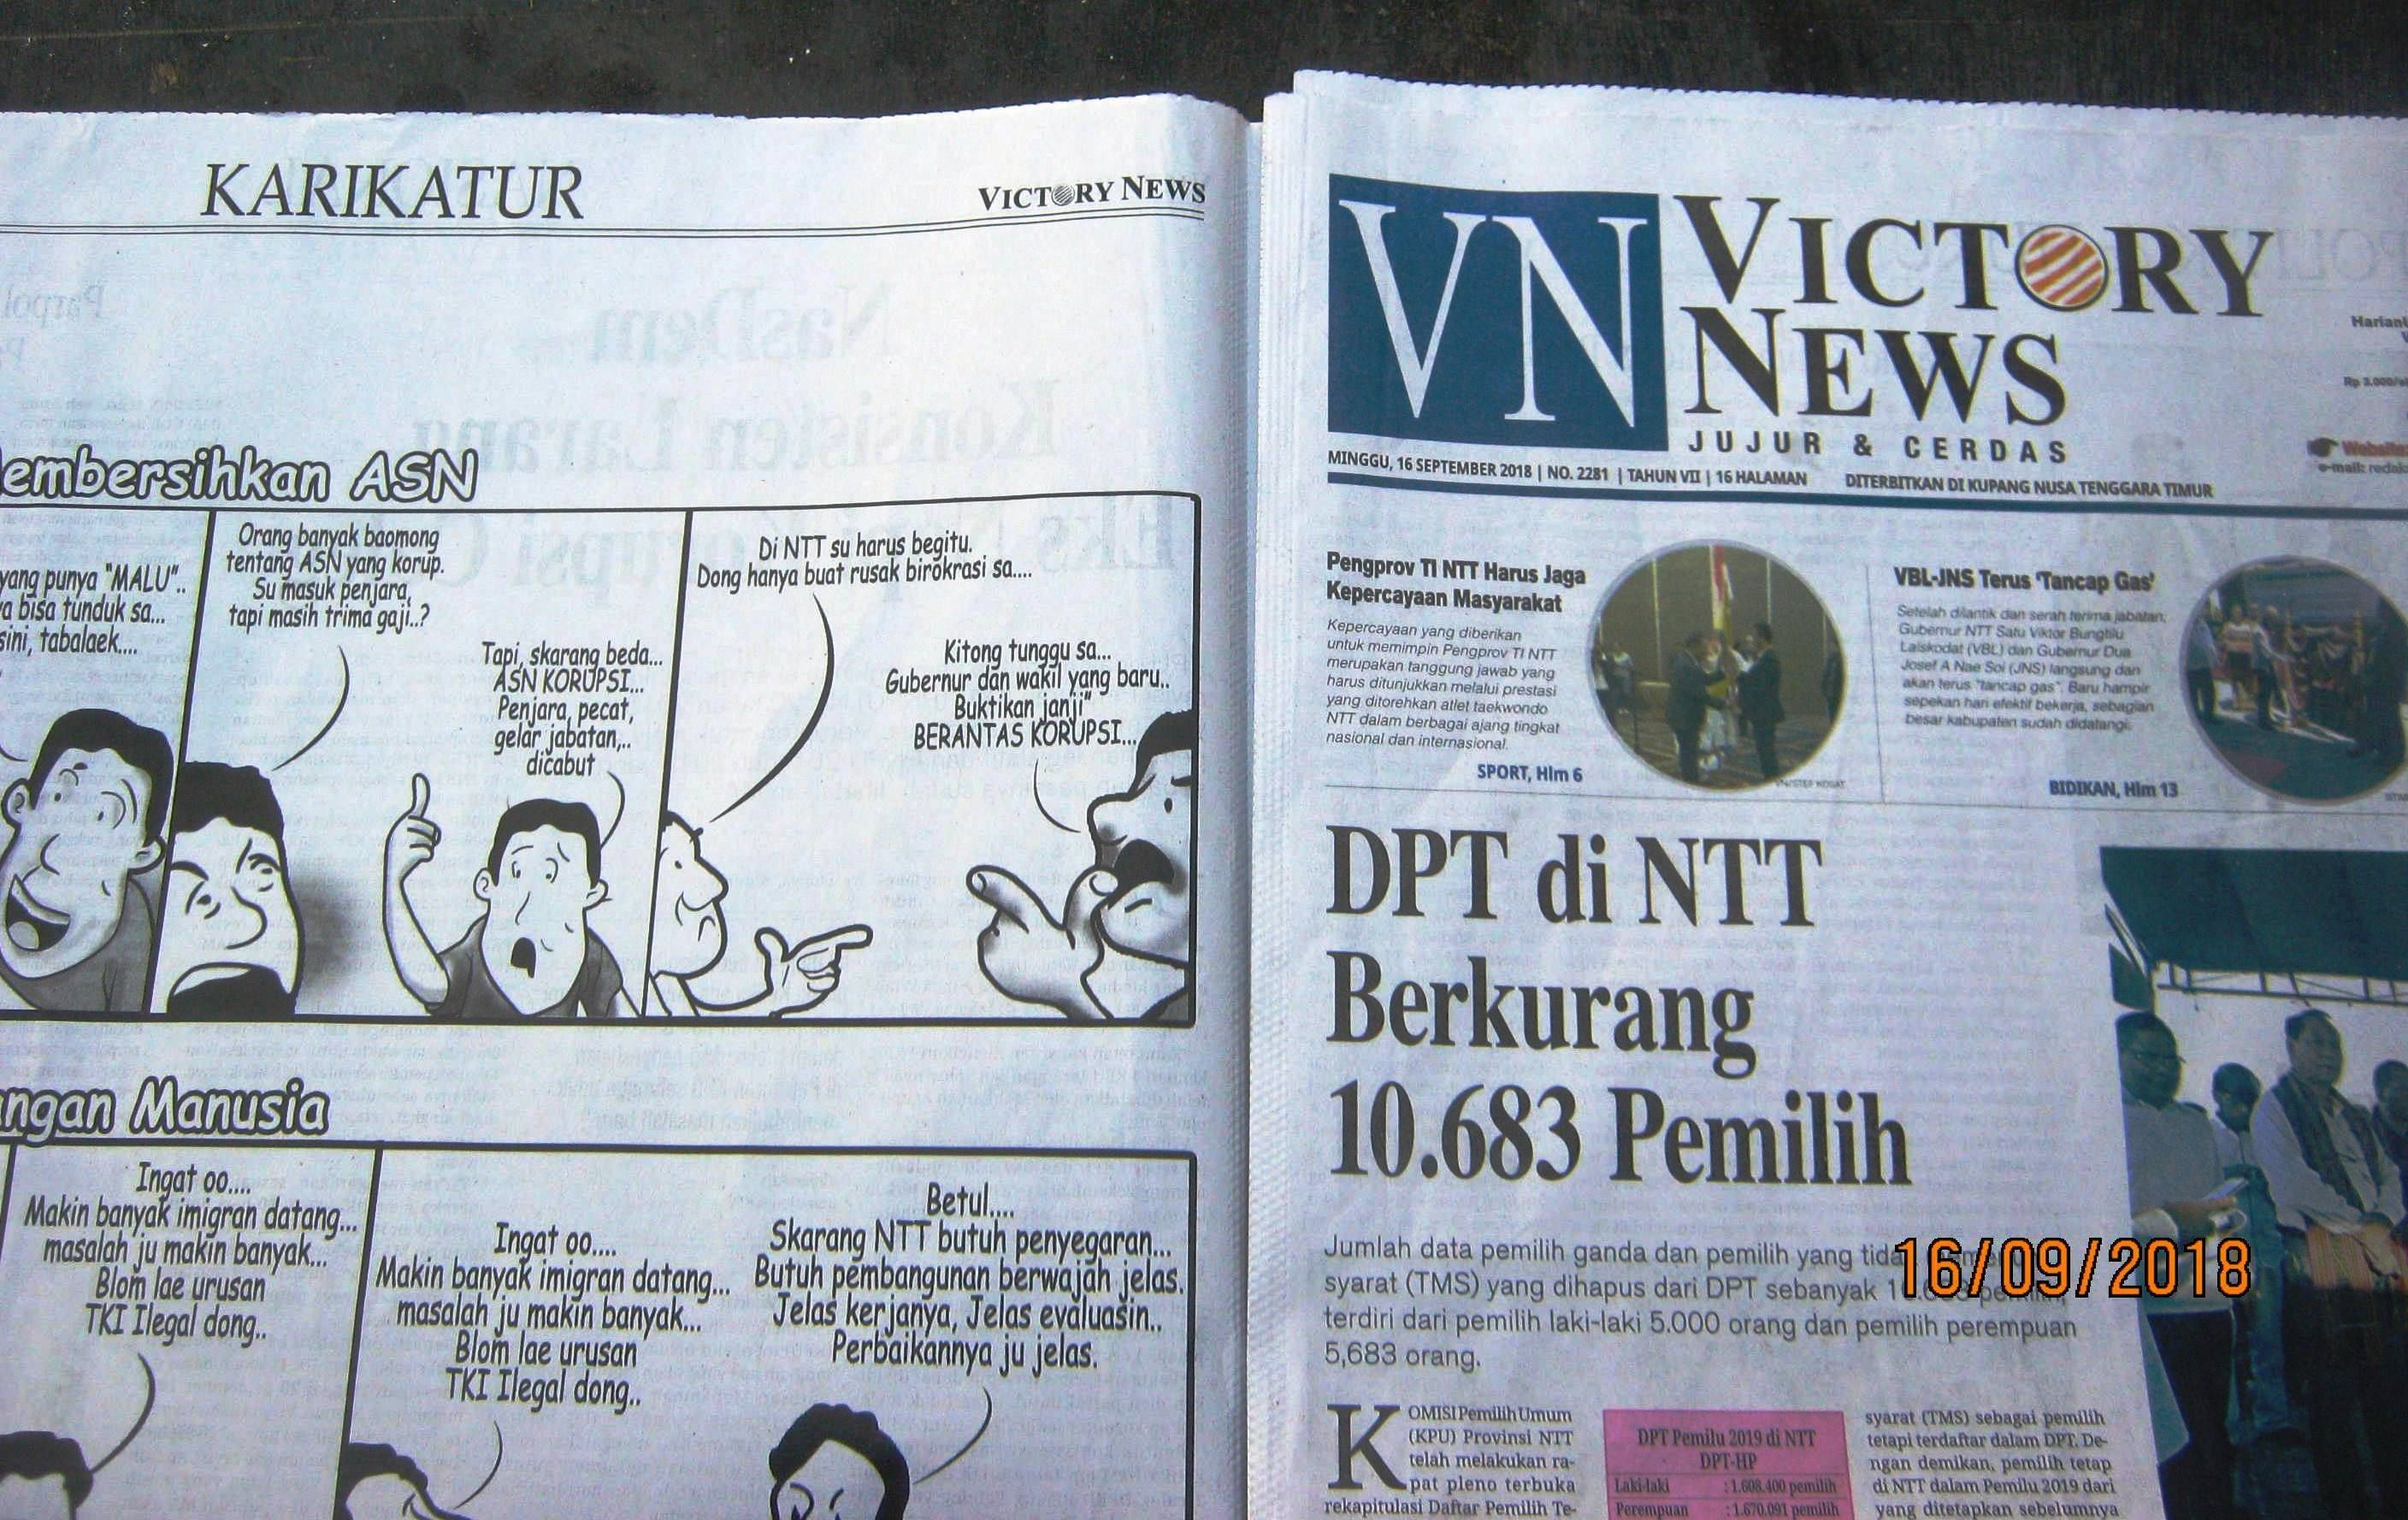 Om Neo Berjenis Karikatur Kartun Opini Ataukah Kartun Editorial